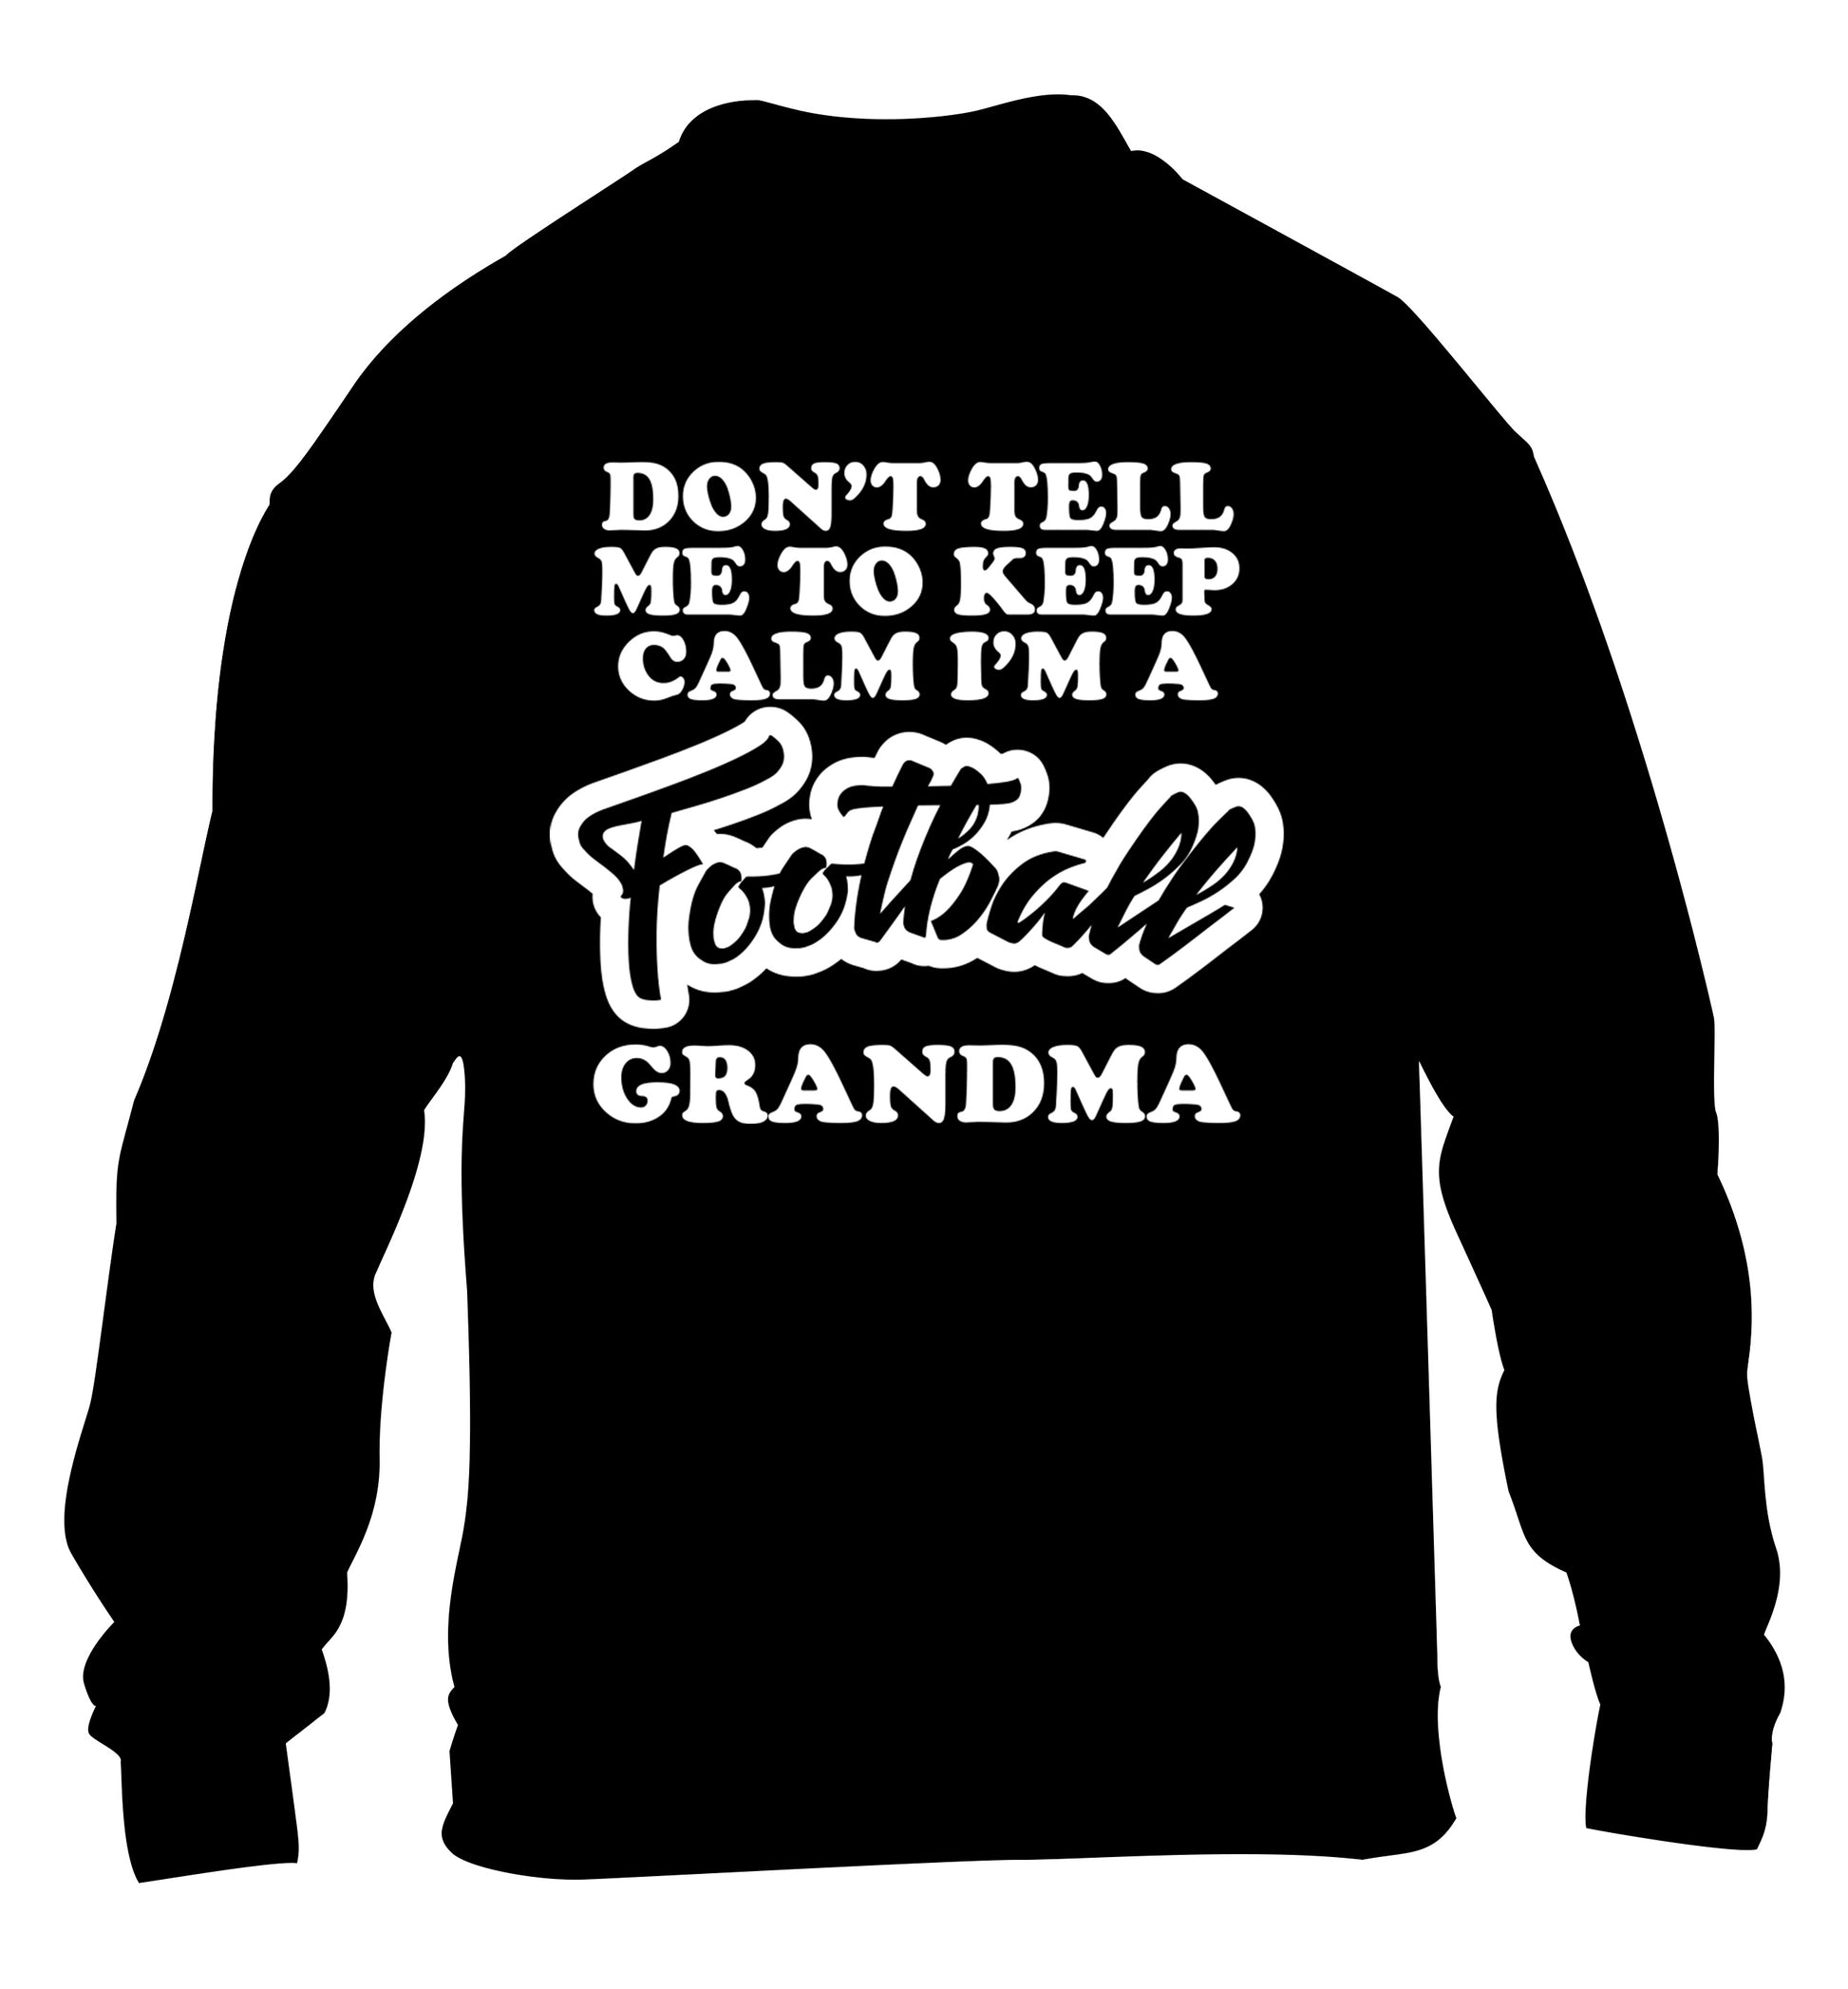 Don't tell me to keep calm I'm a football grandma children's black sweater 12-14 Years